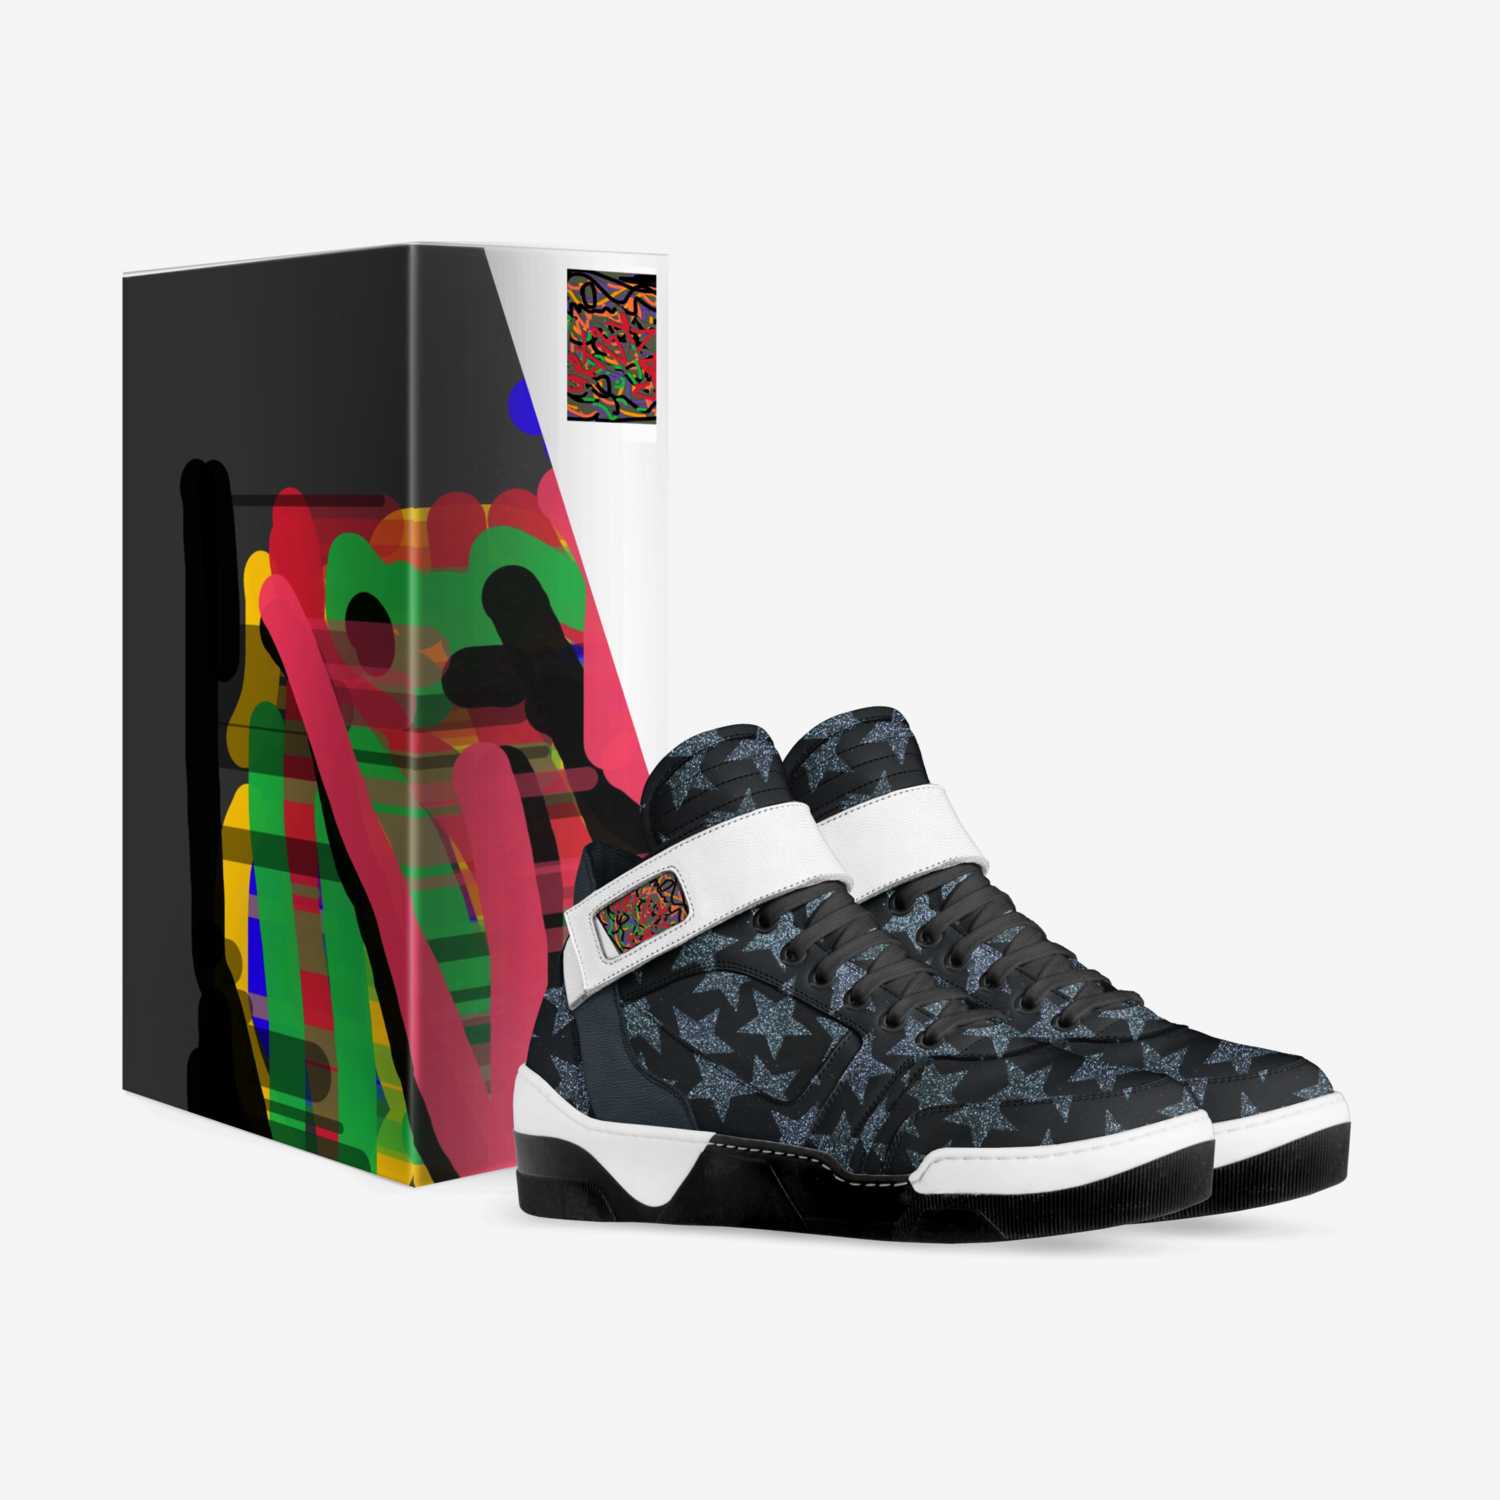 Atlny custom made in Italy shoes by Caviar Dreams | Box view